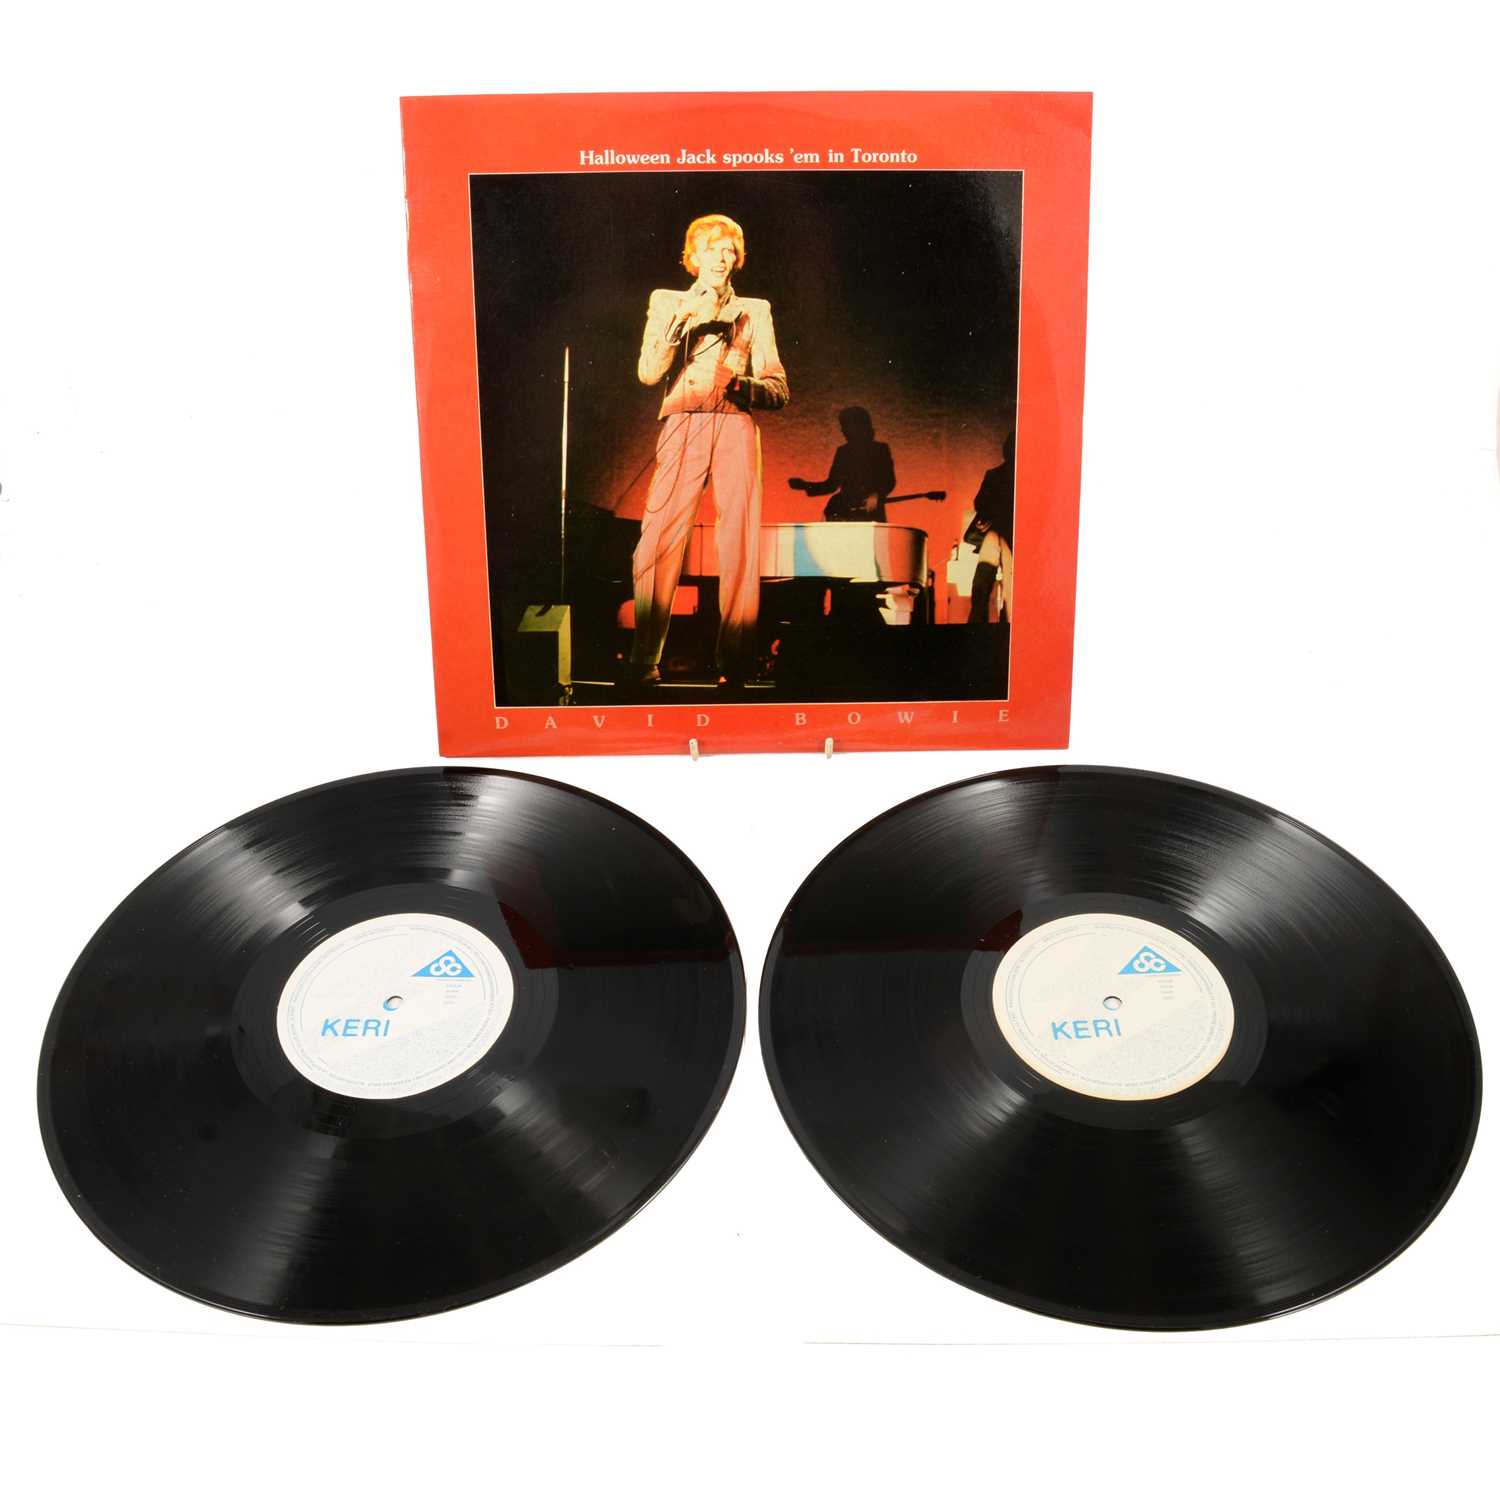 Lot 15 - David Bowie LP two vinyl record set, Halloween Jack Spooks 'em in Toronto